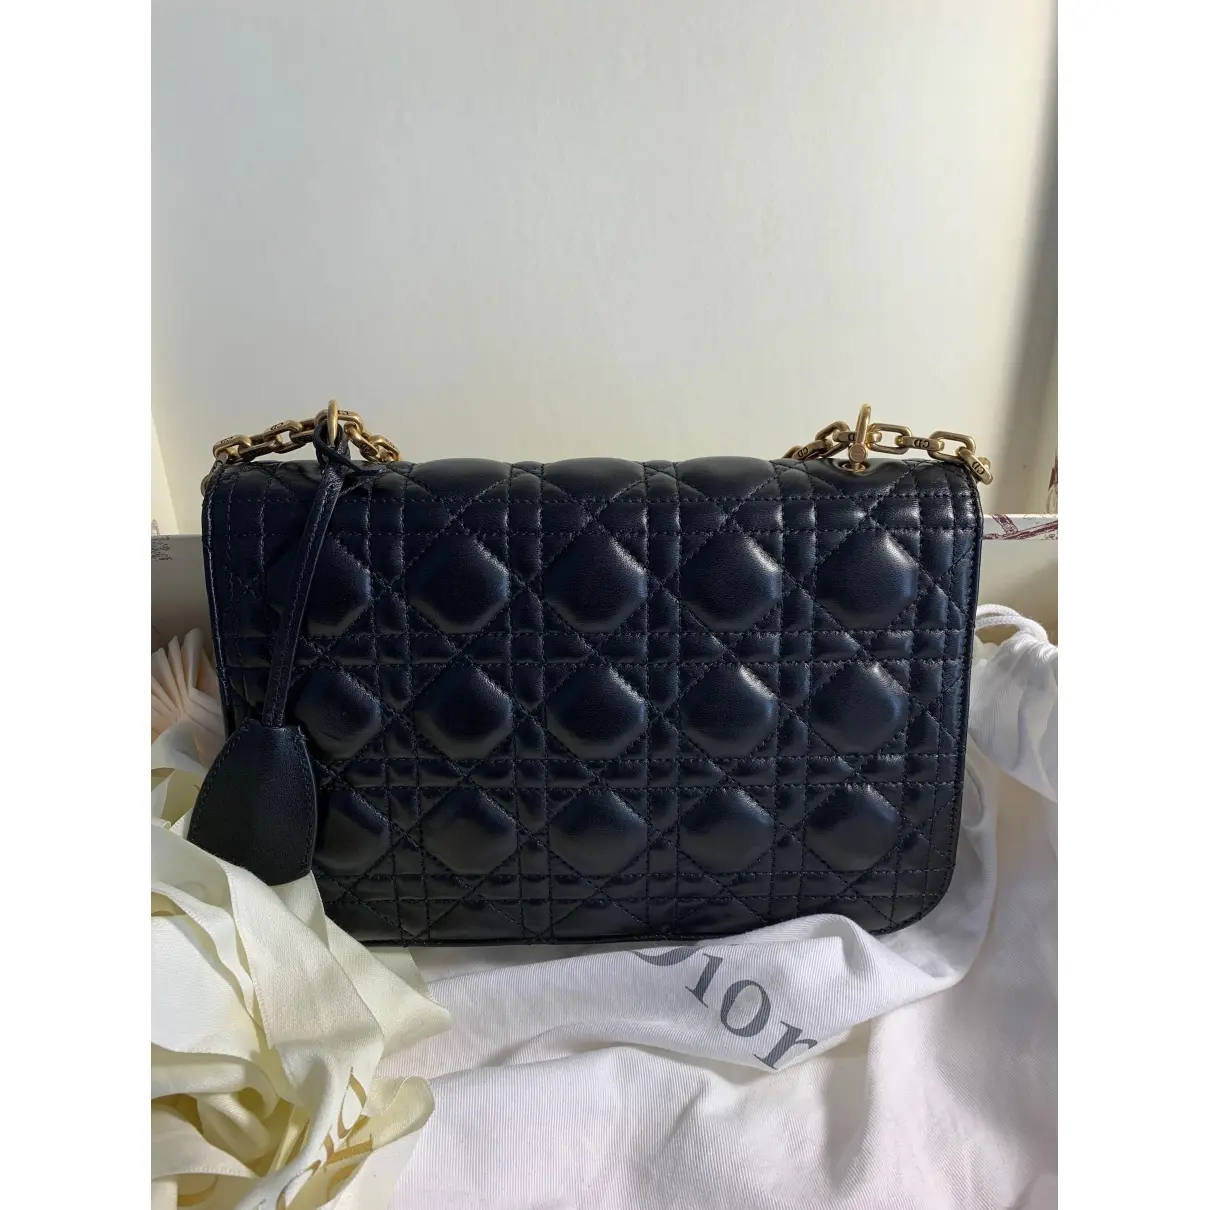 Dior DiorAddict leather handbag for sale